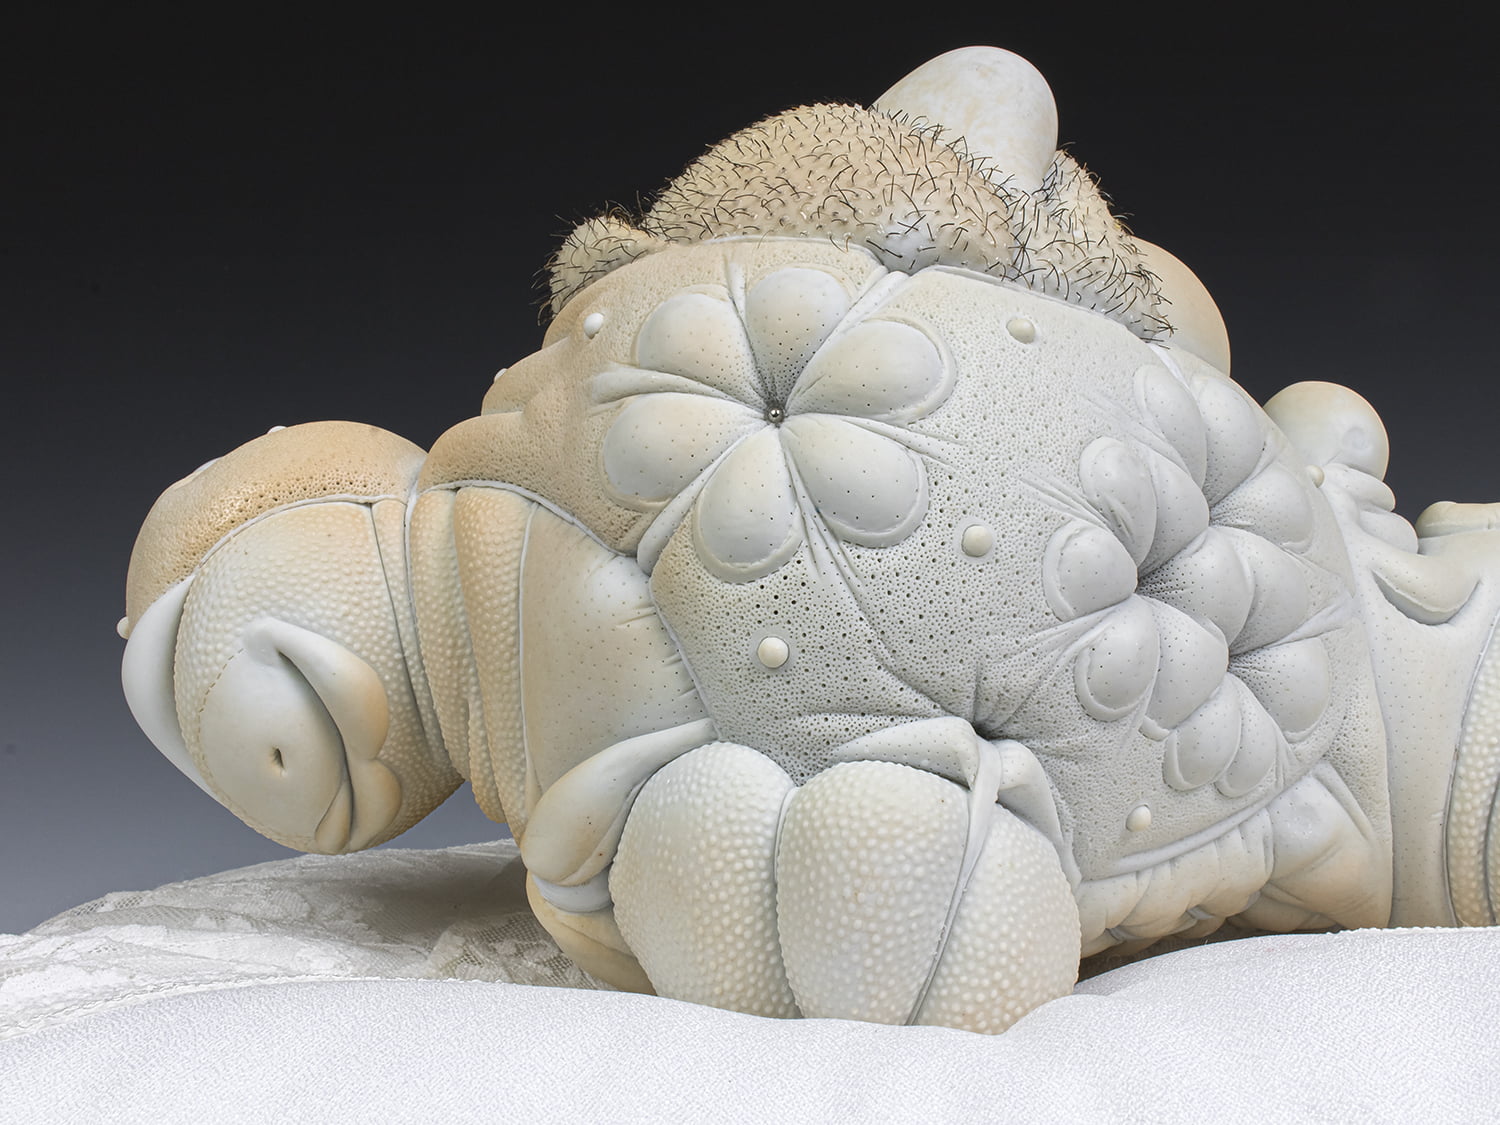 Jason Briggs "Olympia" (detail 3). porcelain, hair, and mixed media sculpture ceramics.